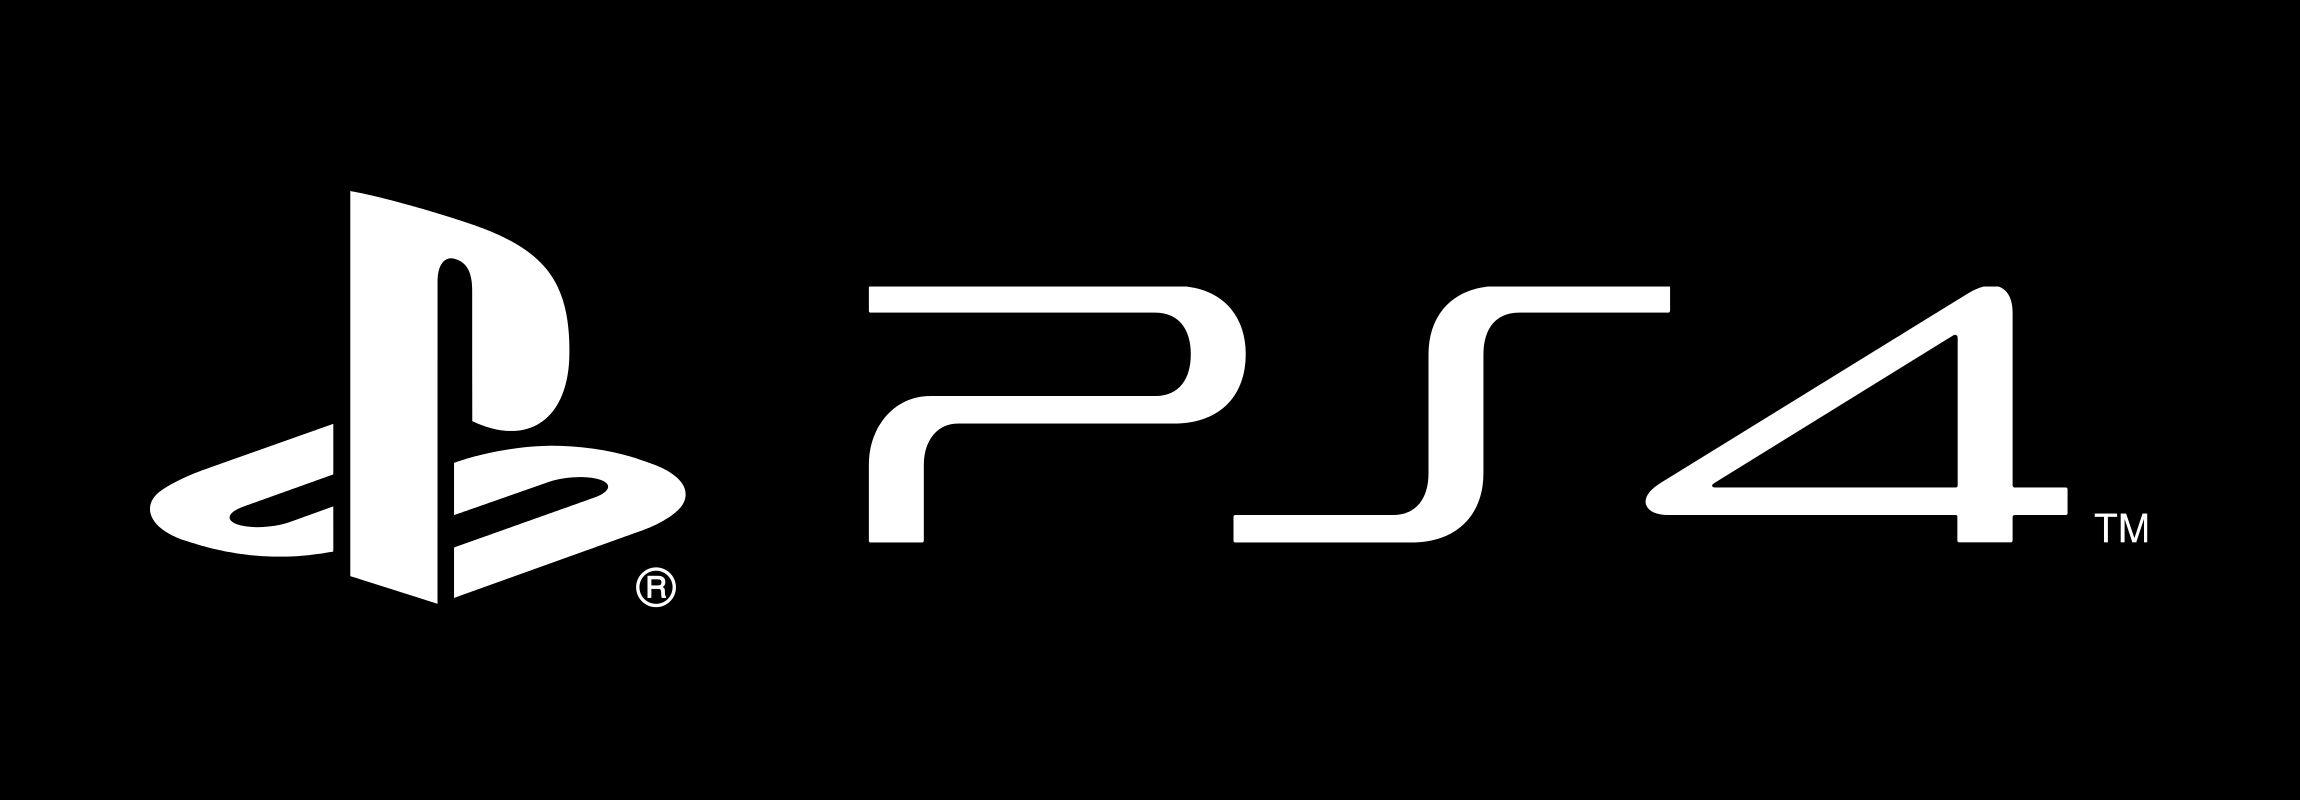 White PlayStation 4 Logo - PlayStation Logo, PlayStation Symbol, History and Evolution